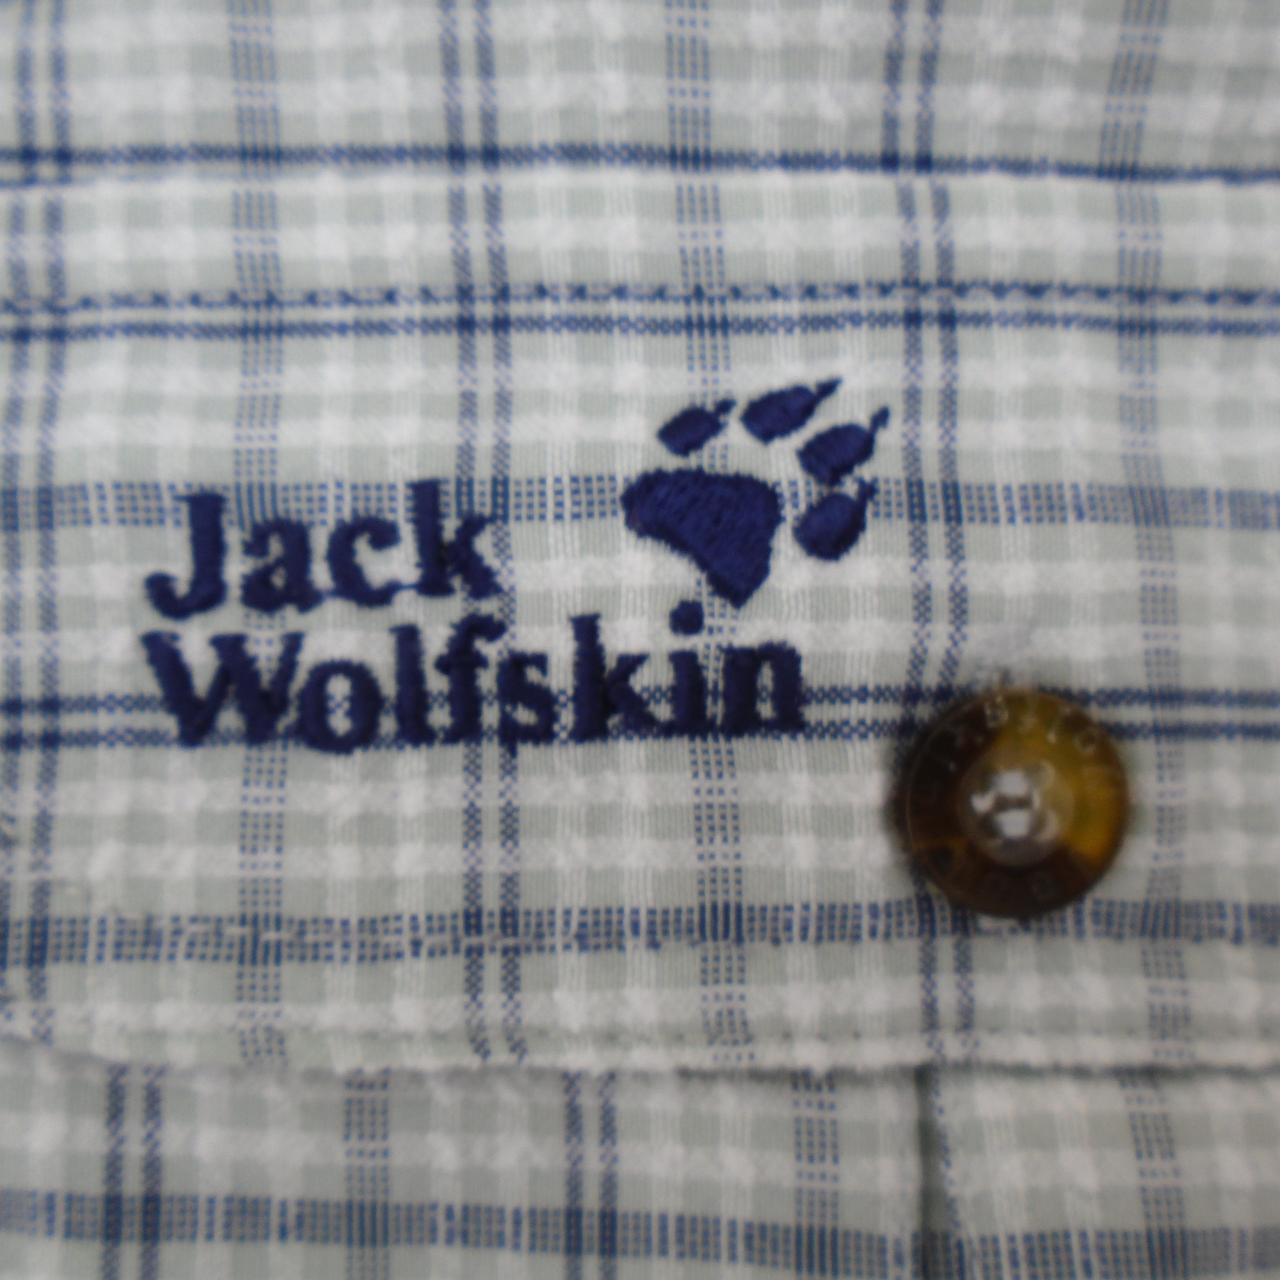 Blusa de Mujer Jack Wolfskin. Multicolor. L. Usado. Bien